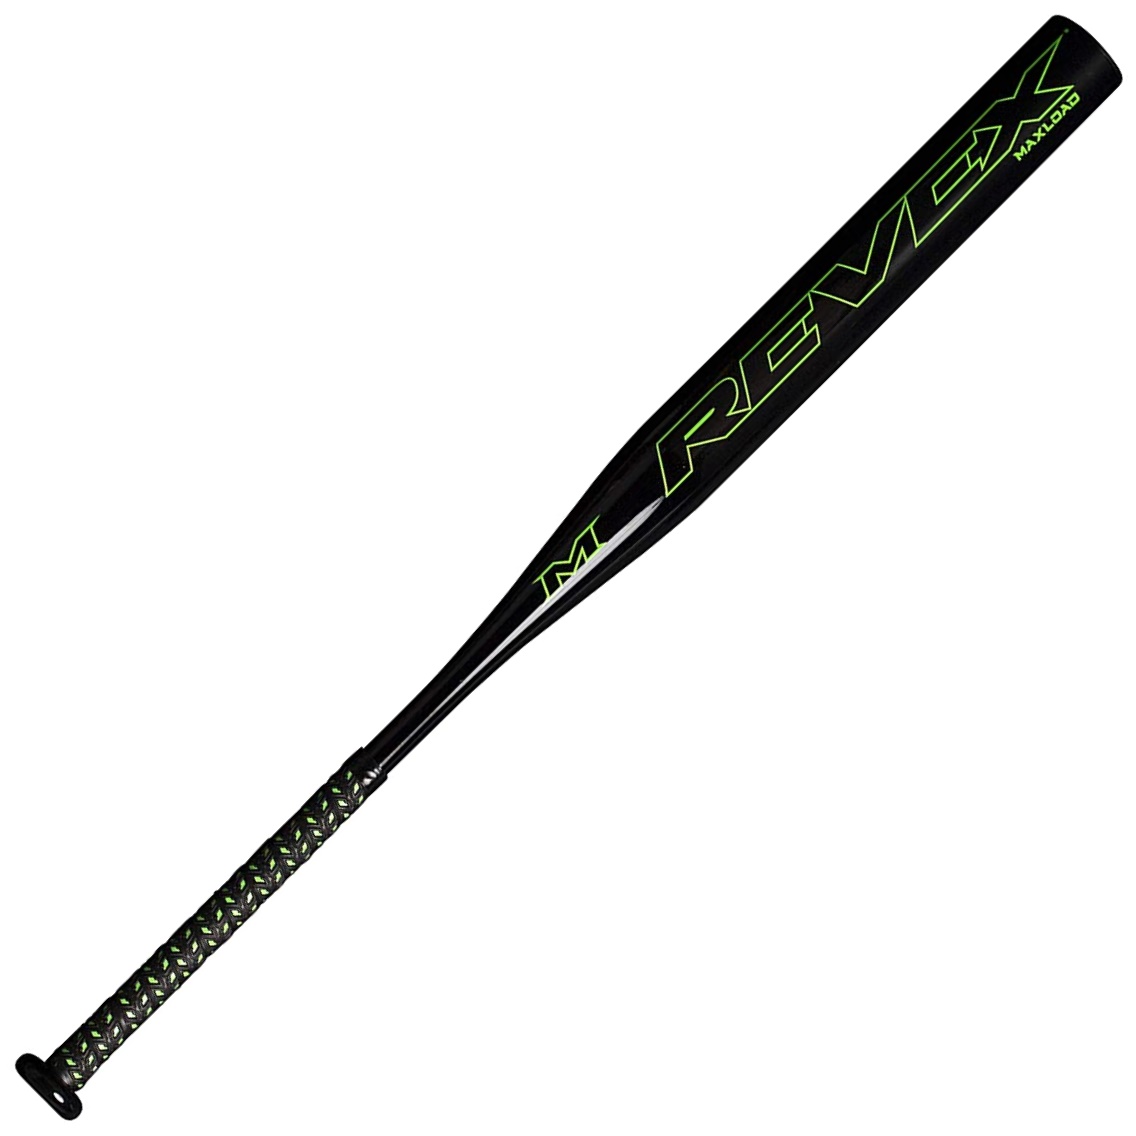 miken-rev-ex-14-one-piece-maxload-slowpitch-softball-bat-34-inch-27-oz MREV21-3-27 Miken  The Miken 2021 Rev-Ex Maxload all association bat delivers a solid